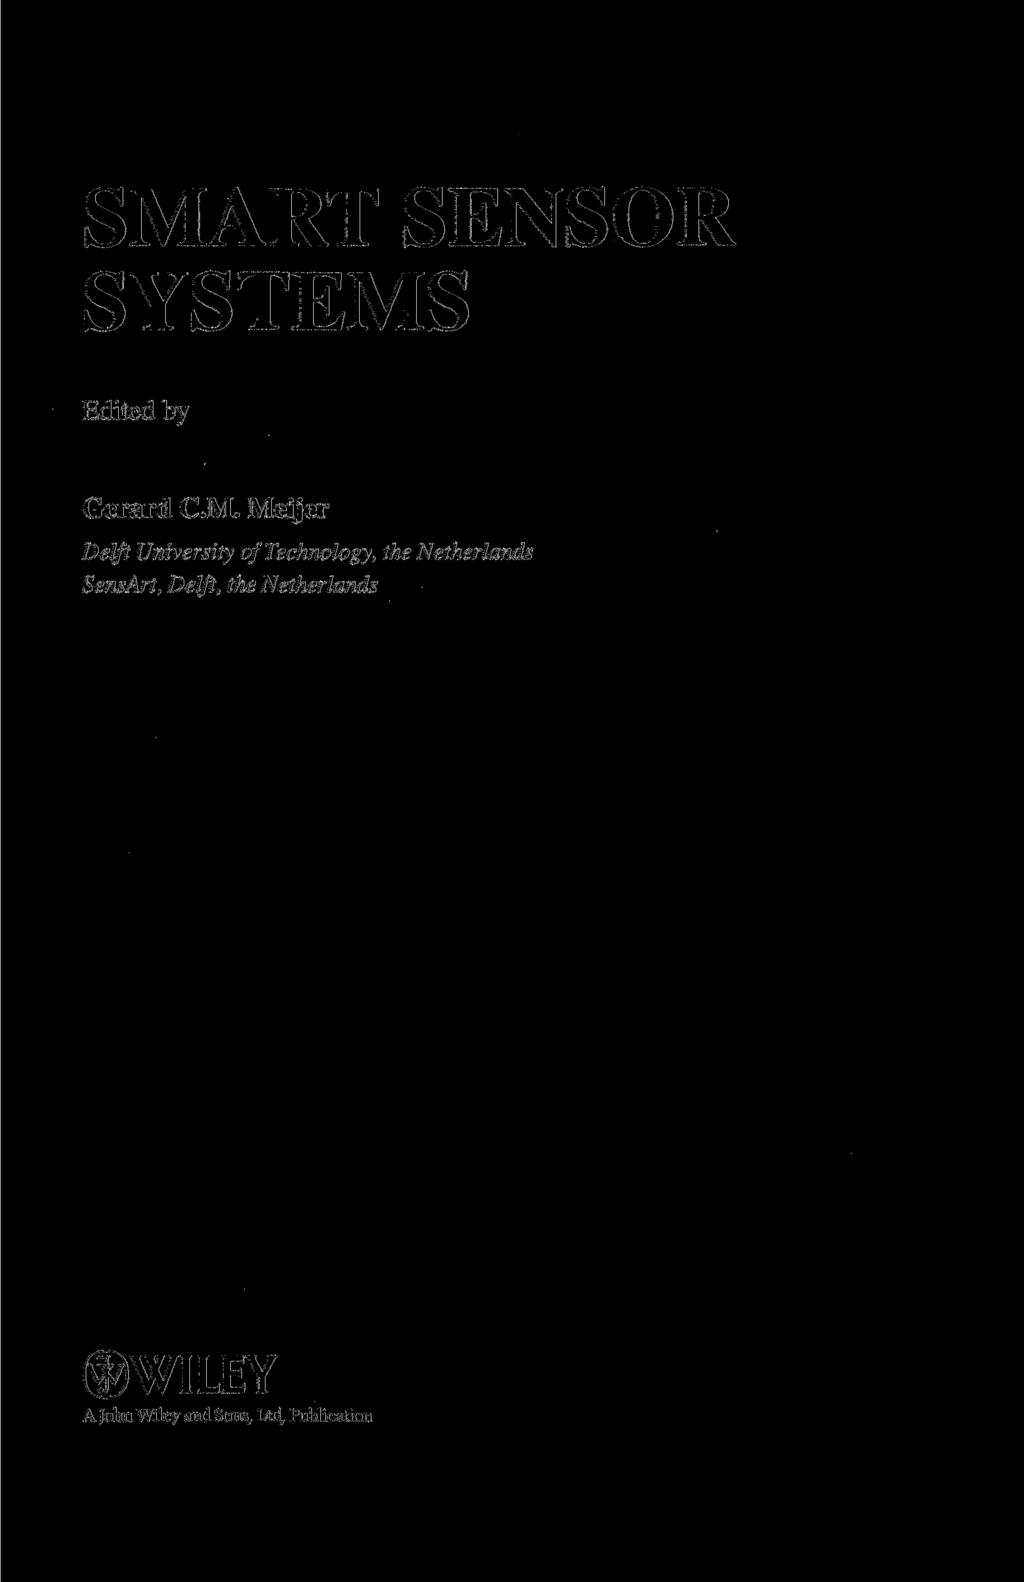 SMART SENSOR SYSTEMS Edited by Gerard CM.